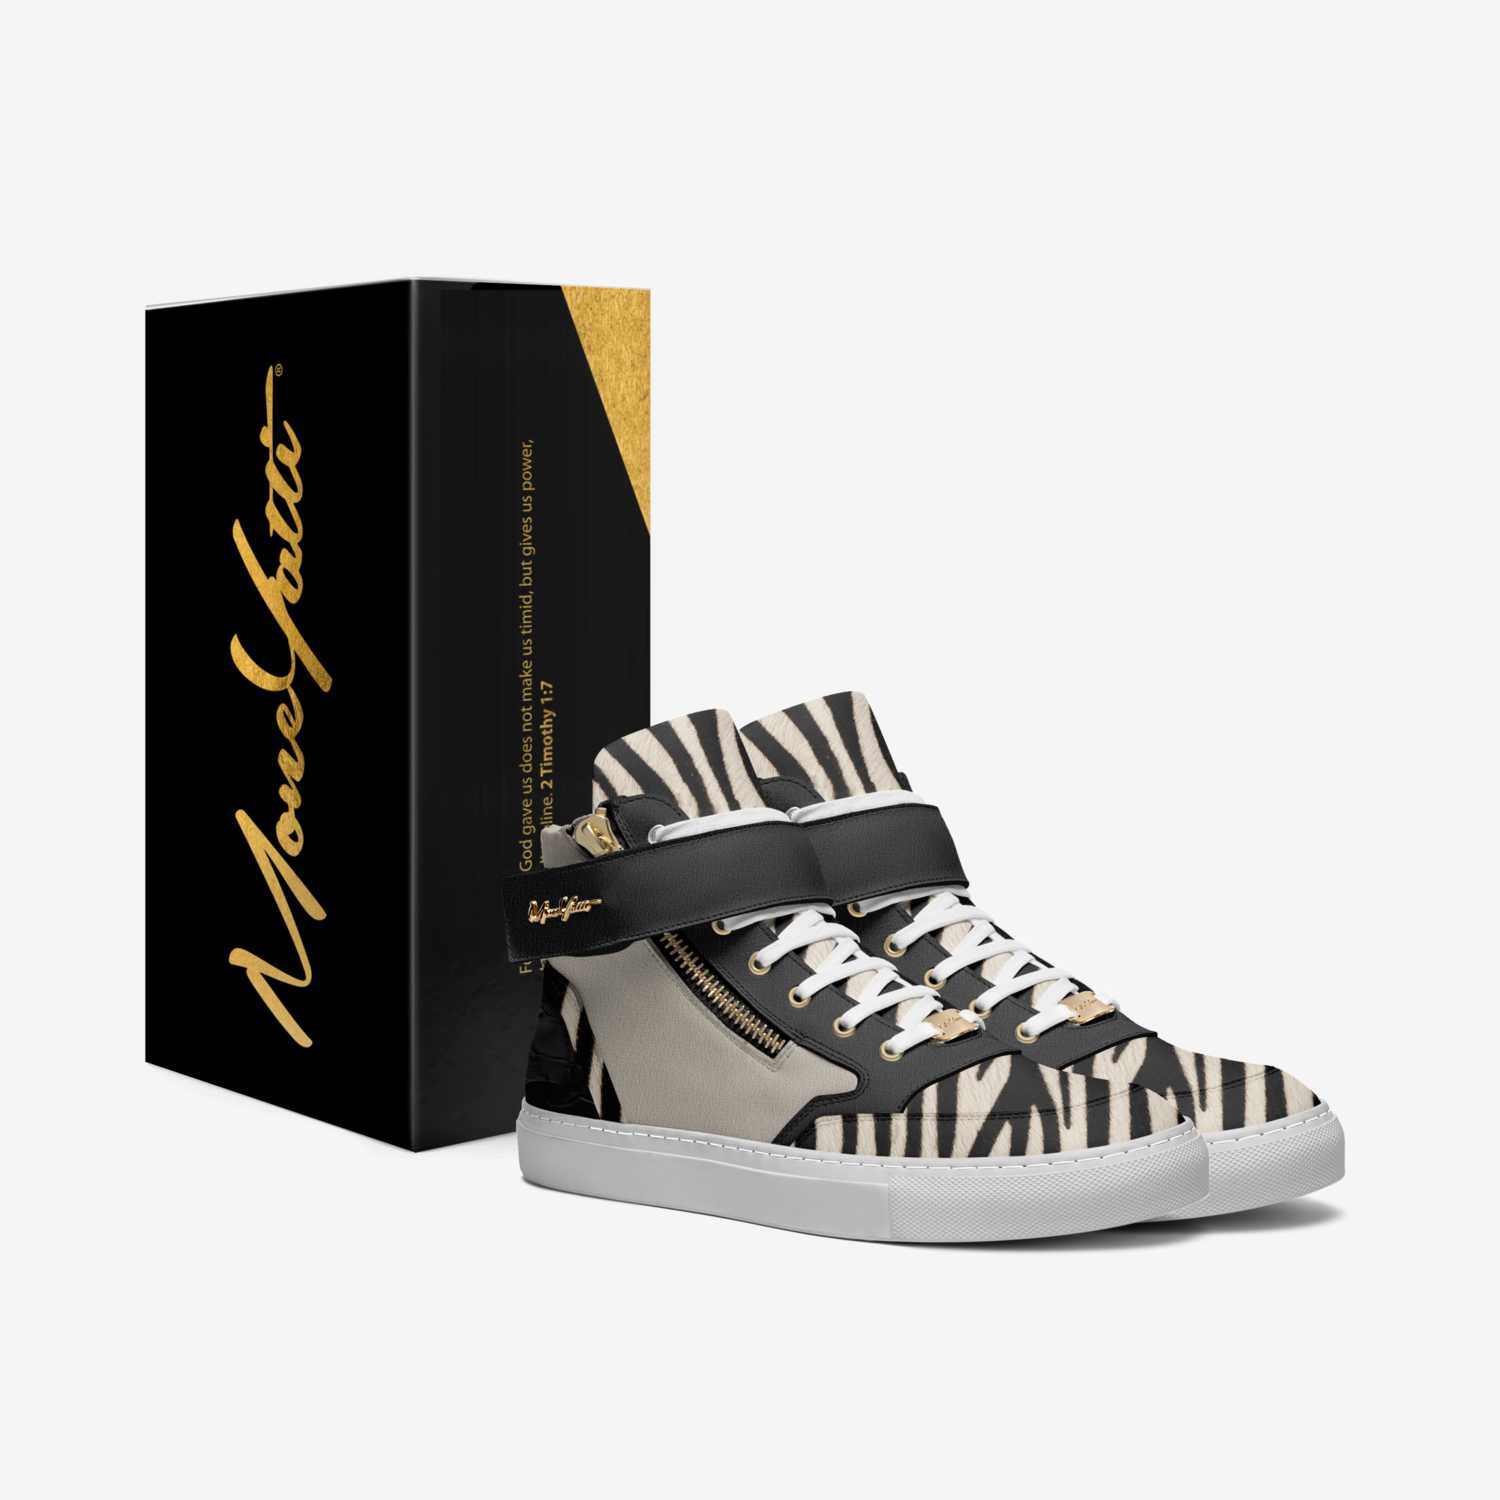 MONEYATTI CLS7W custom made in Italy shoes by Moneyatti Brand | Box view